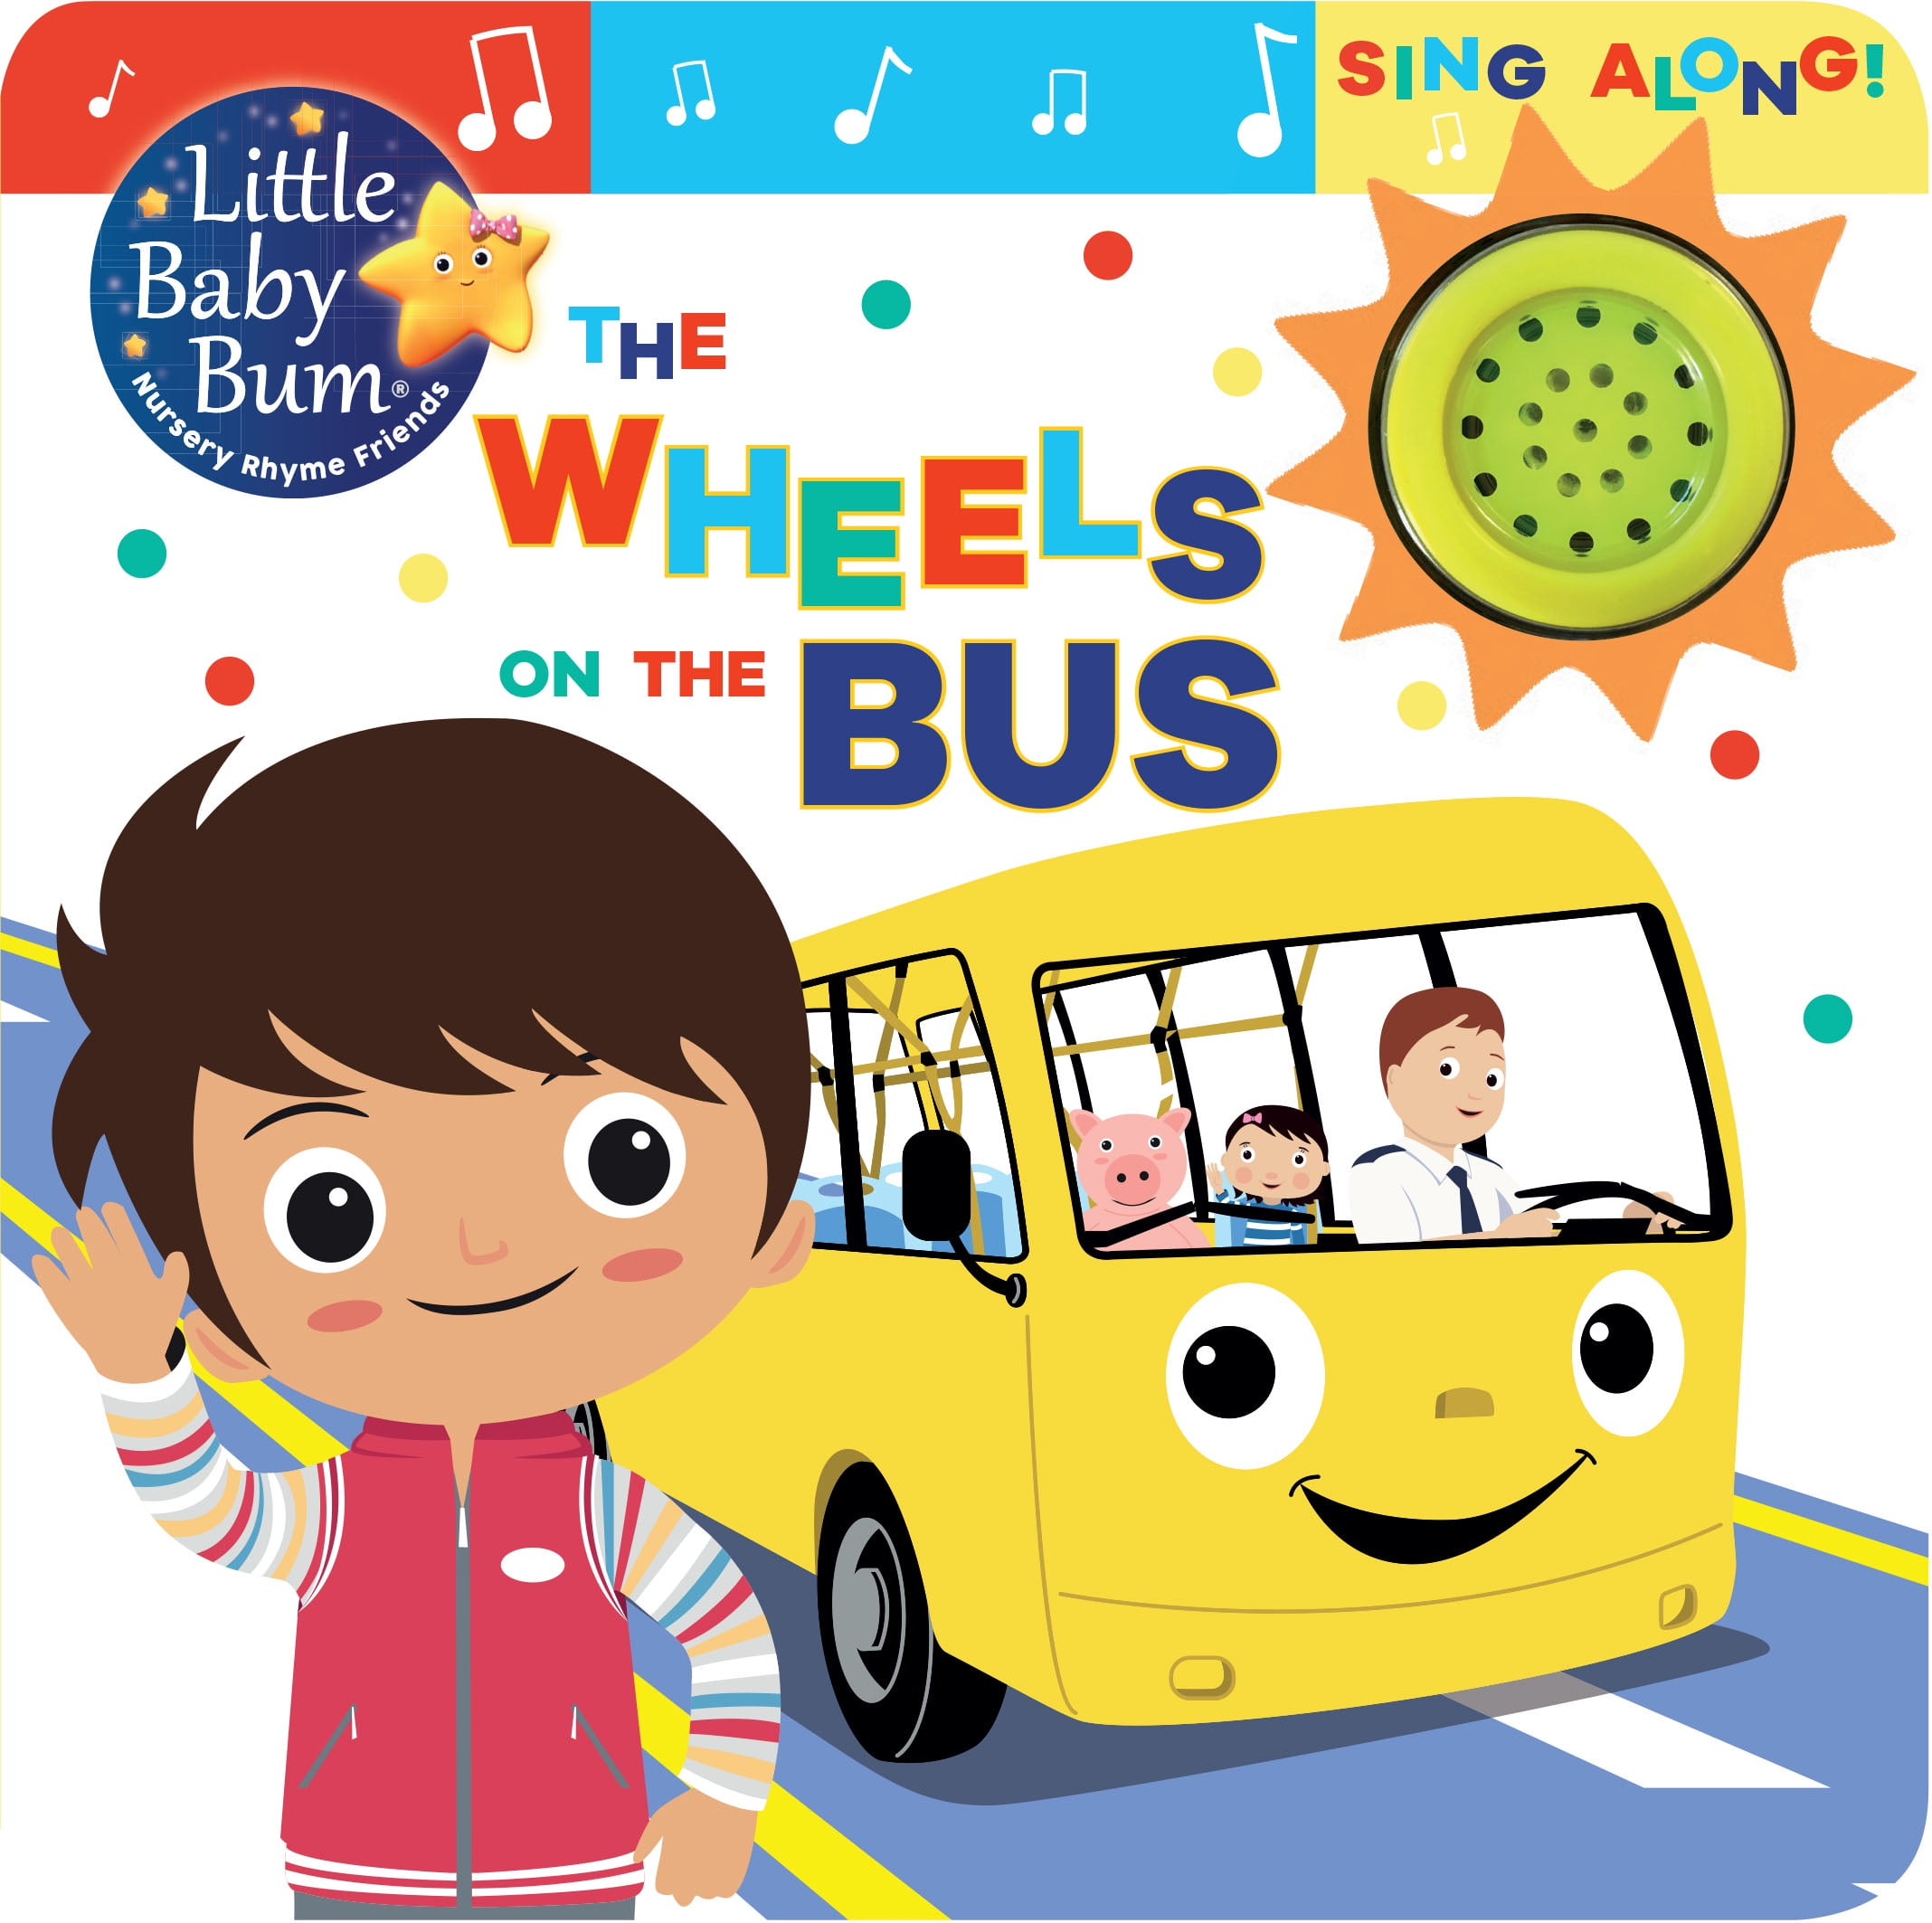 Little Baby Bum The Wheels On The Bus Little Baby Bum: The Wheels on the Bus: Sing Along! (Board Book) - Walmart.com